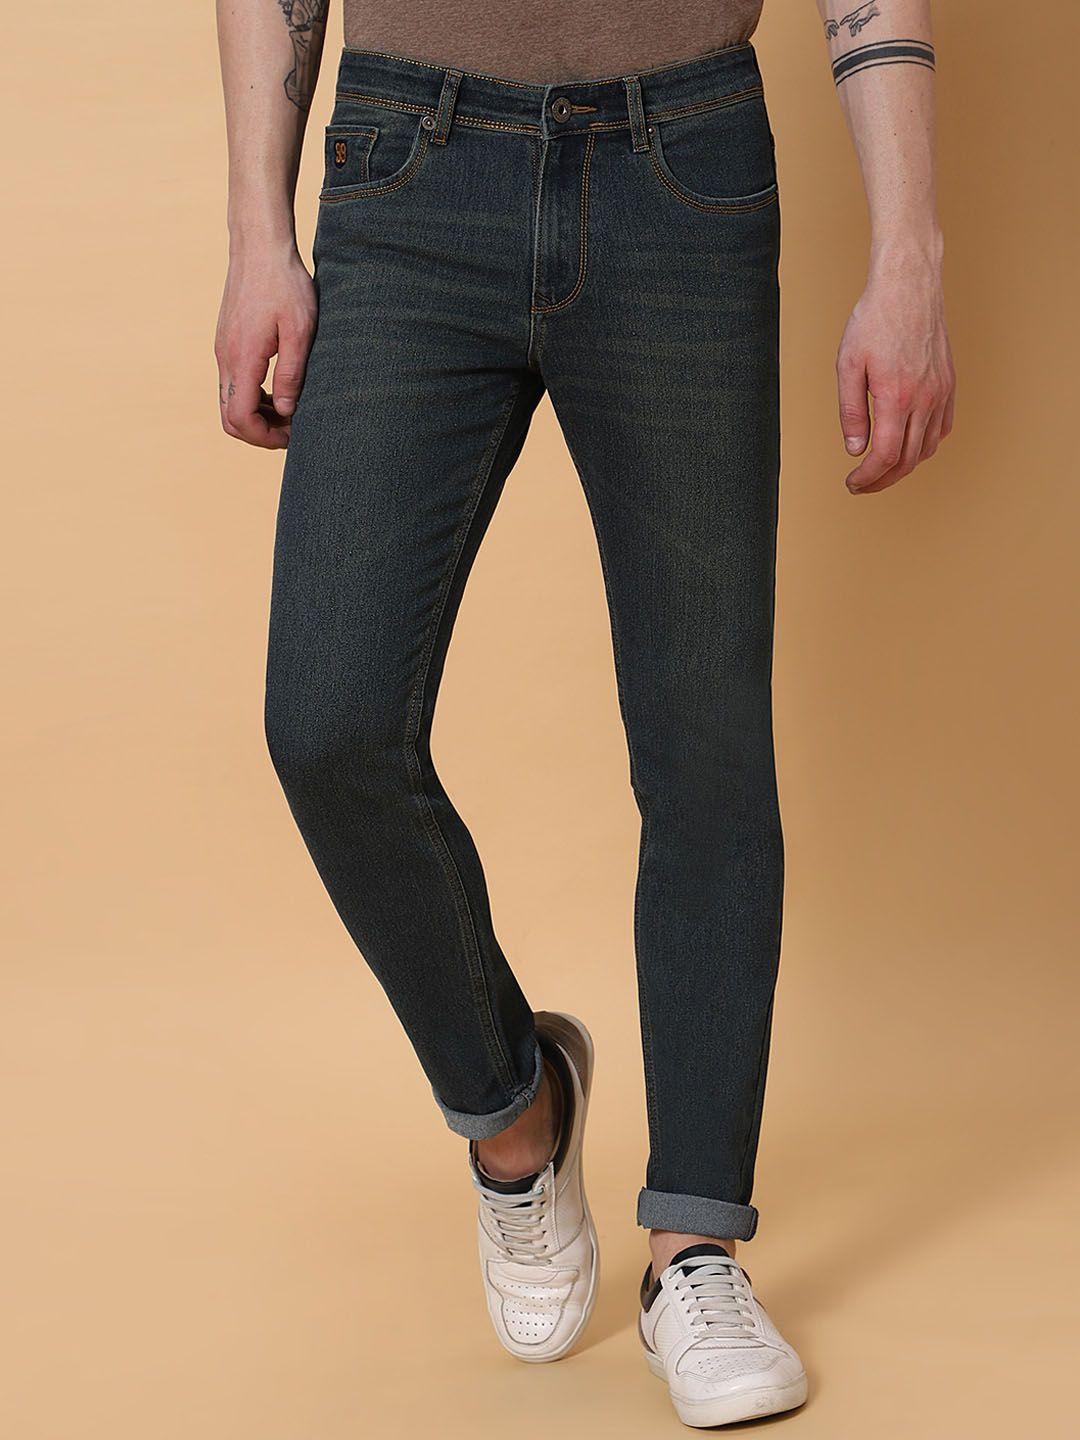 hj-hasasi-men-stretchable-denim-jeans